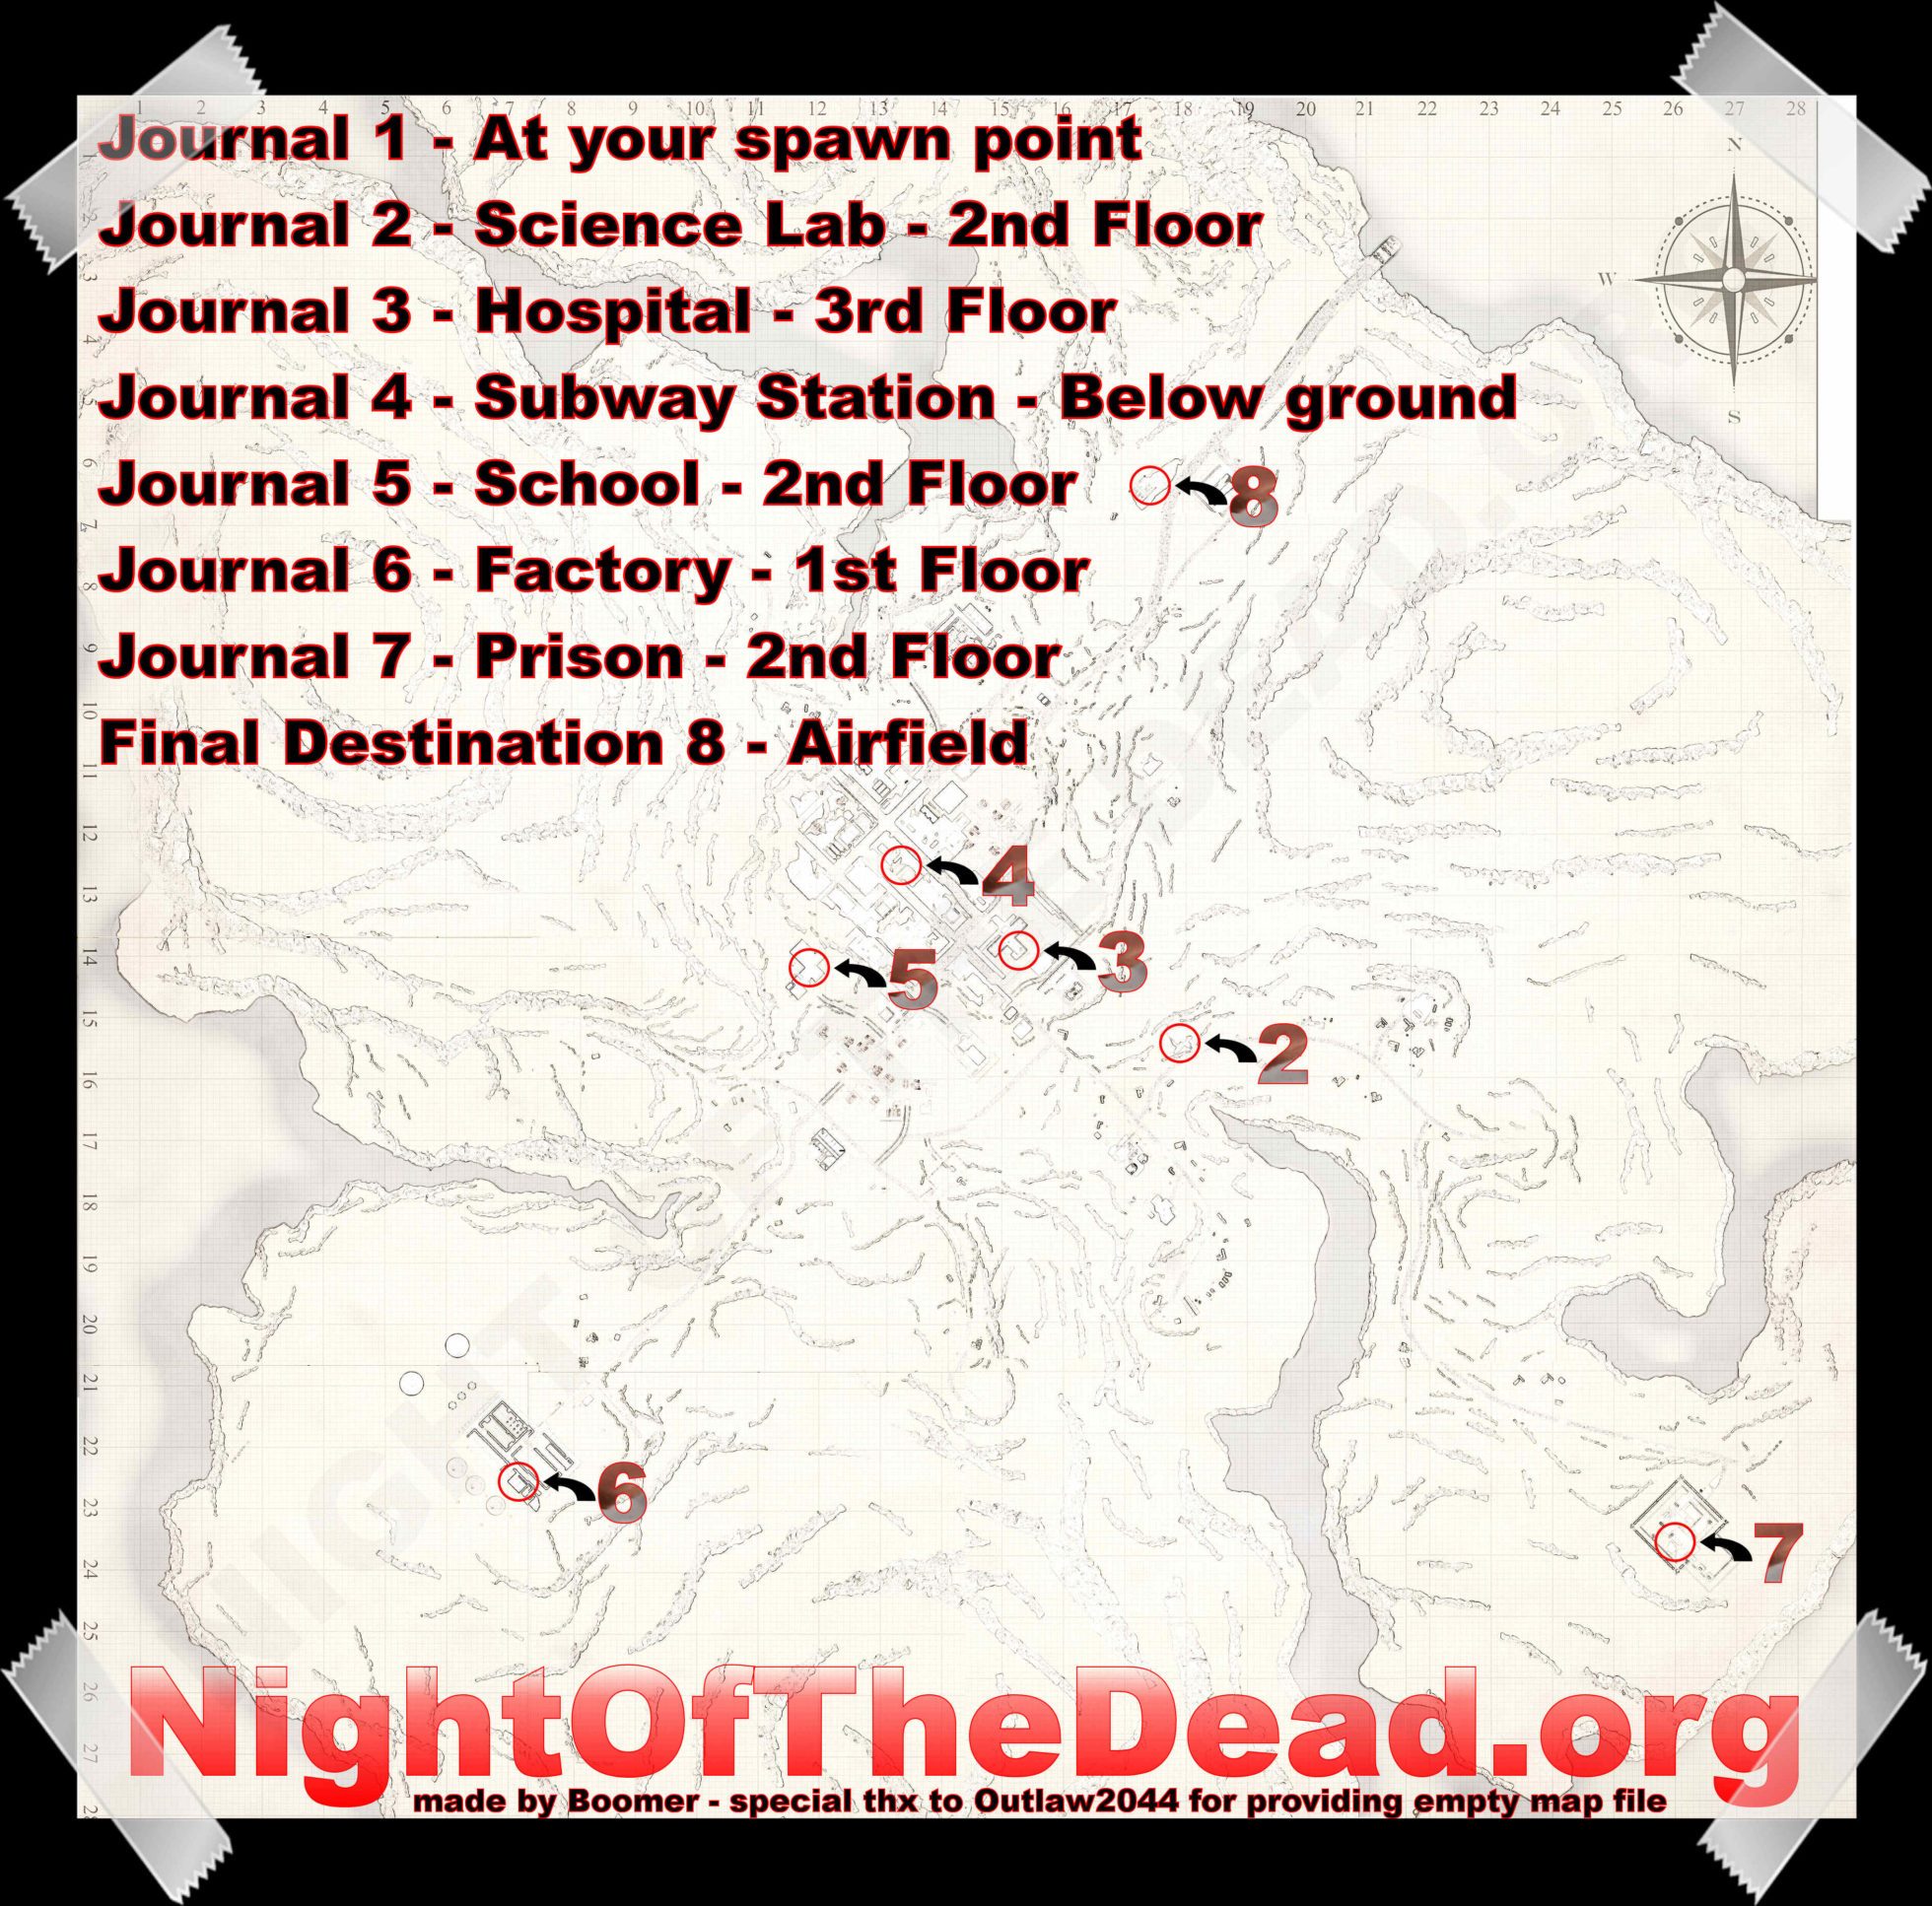 Night of the dead карта на русском